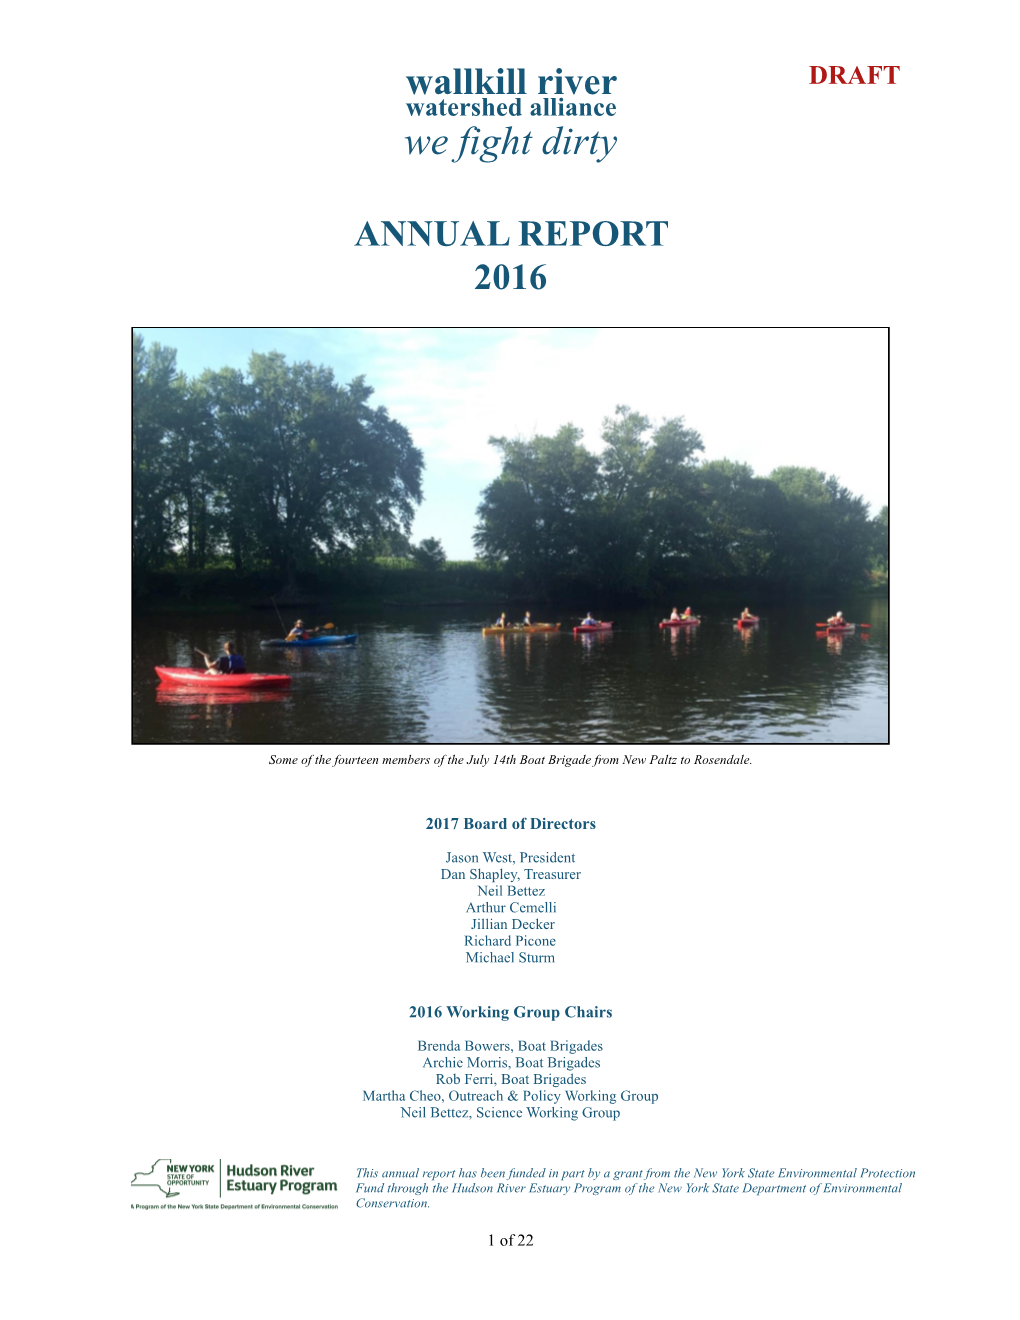 Alliance Annual Report 2016